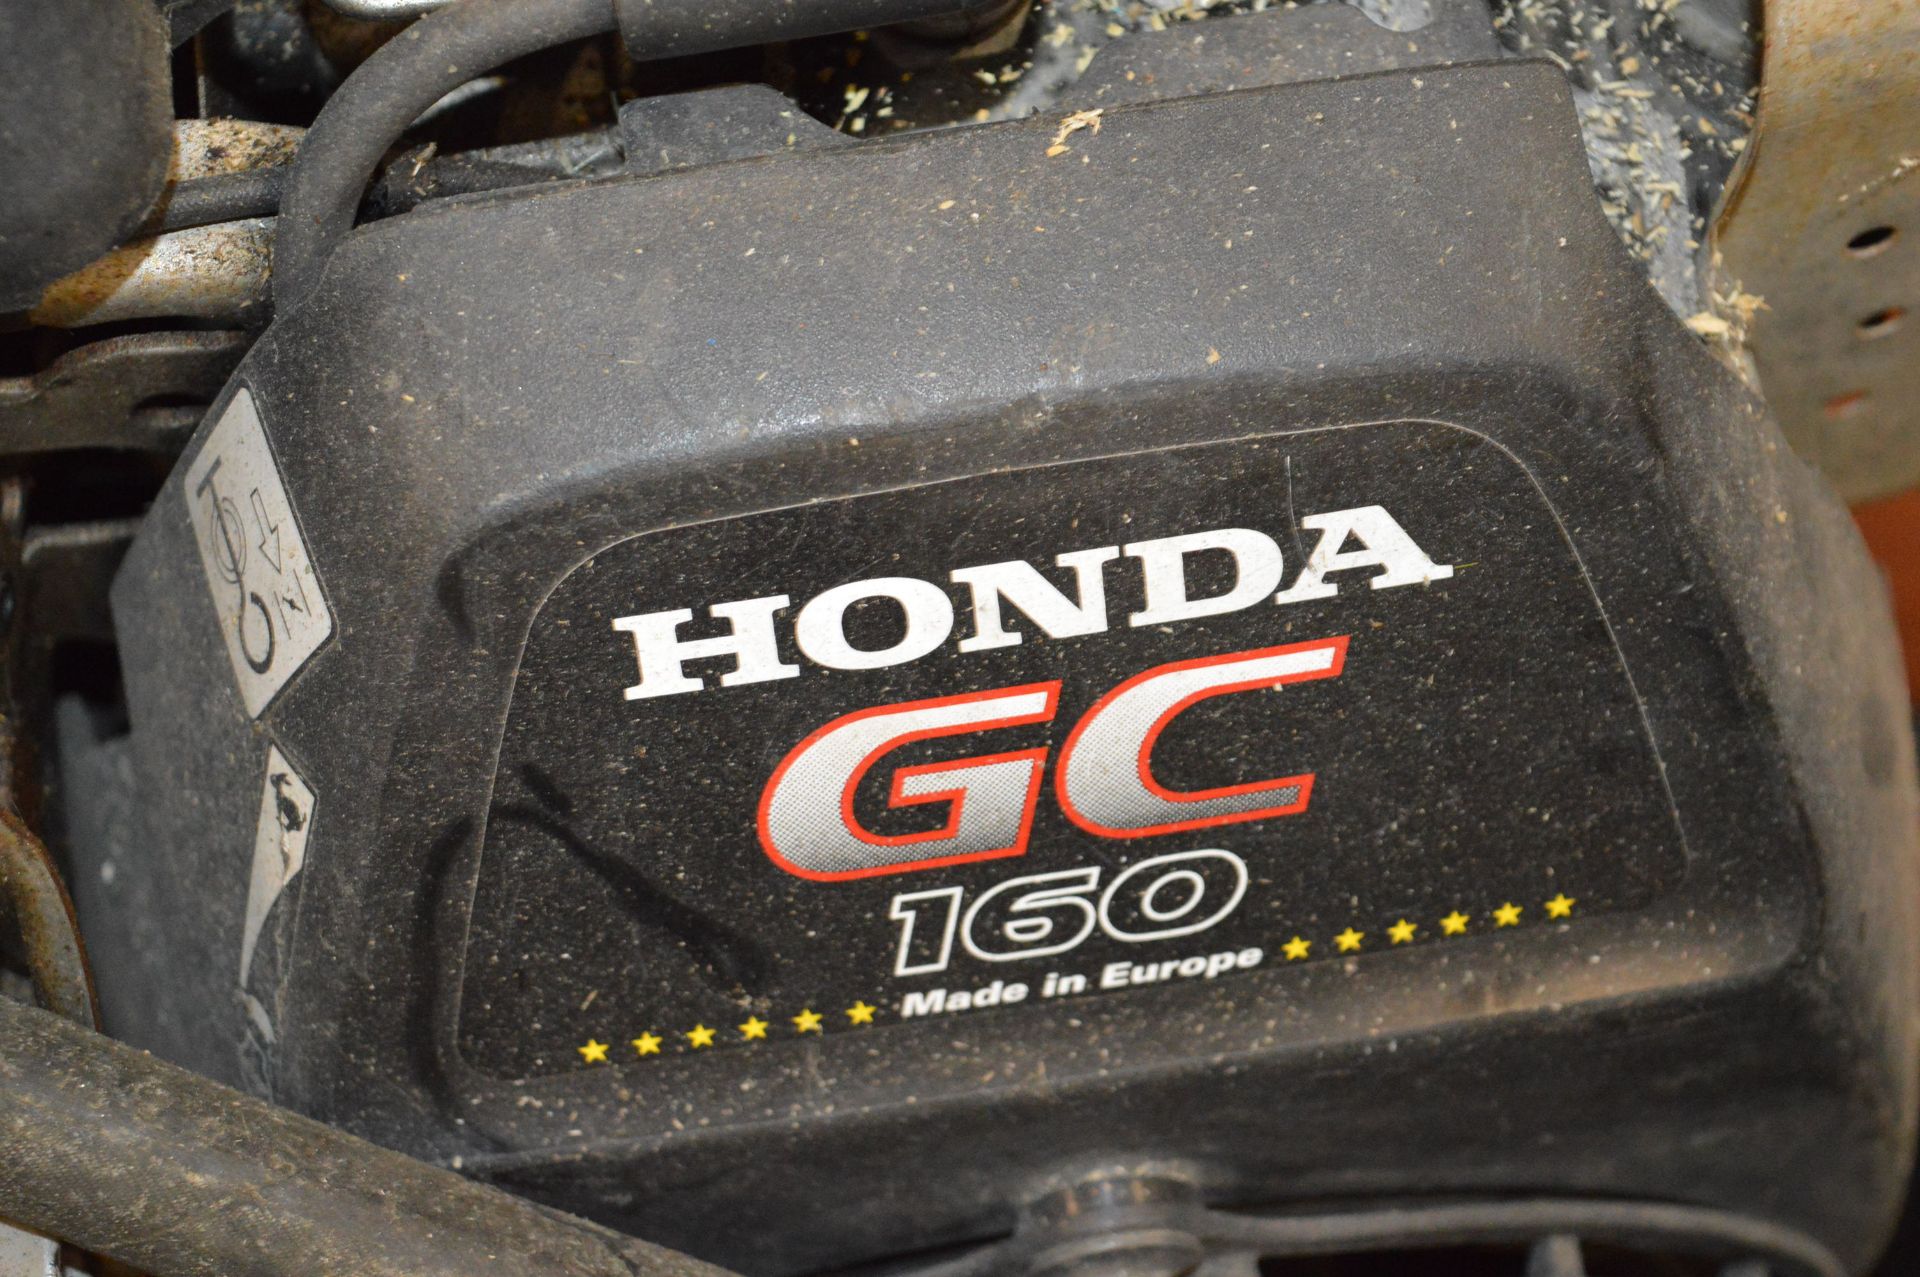 Honda GC160 Power Washer - Image 2 of 2